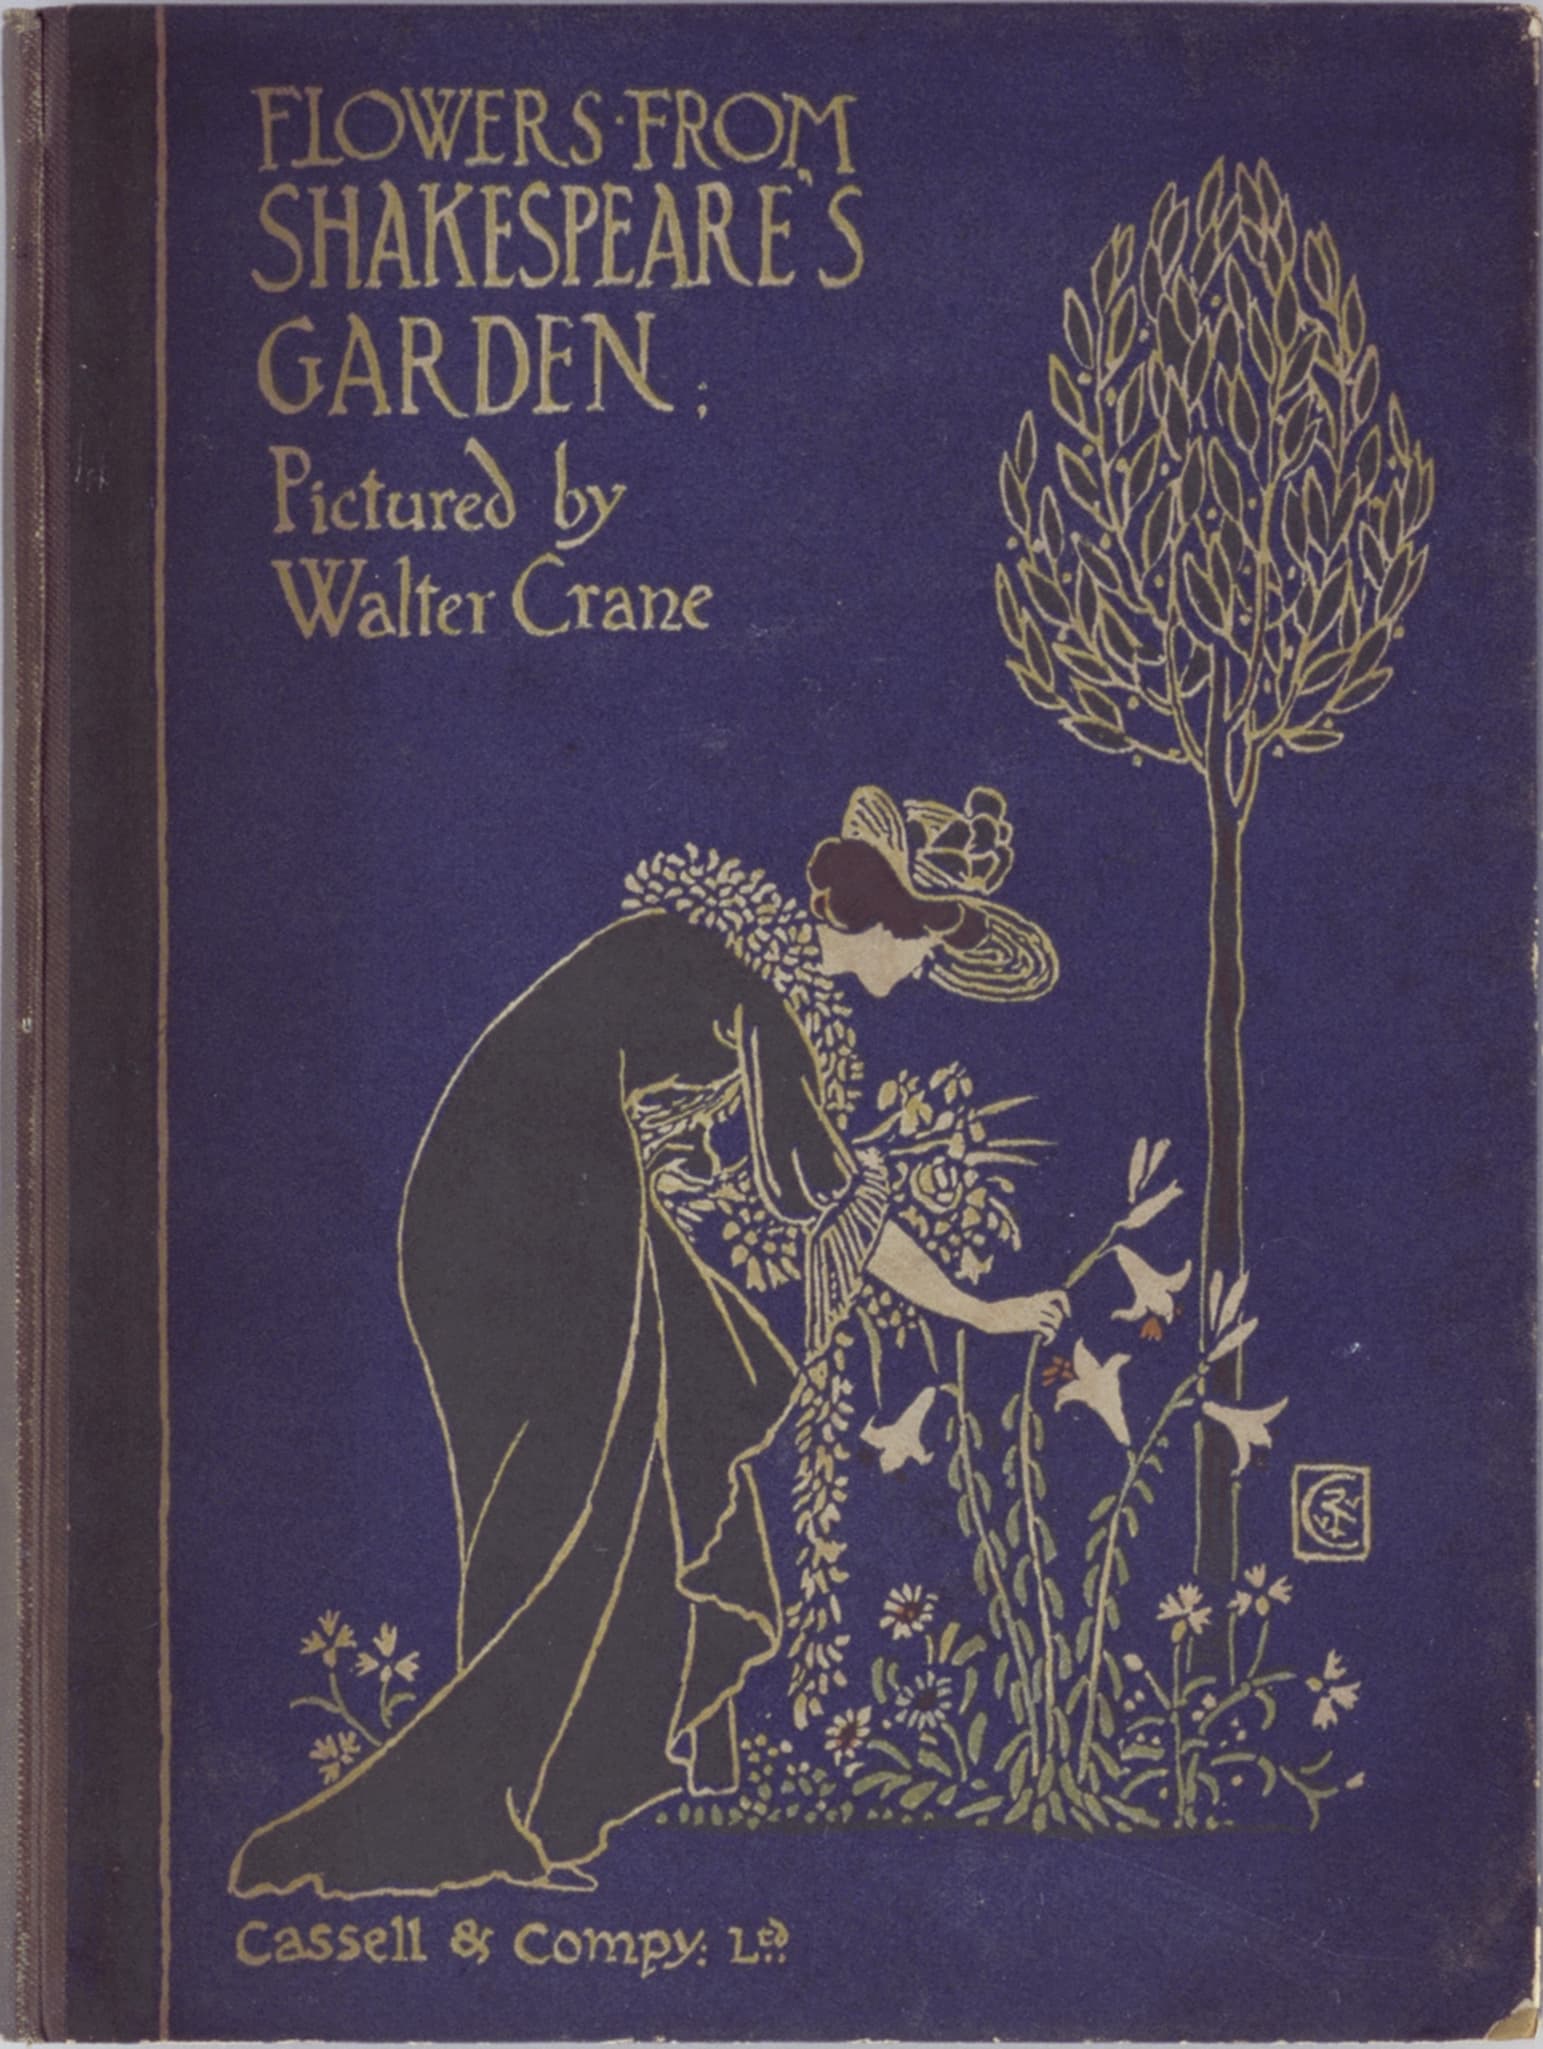 Cover of “Flowers from Shakespeare’s Garden”